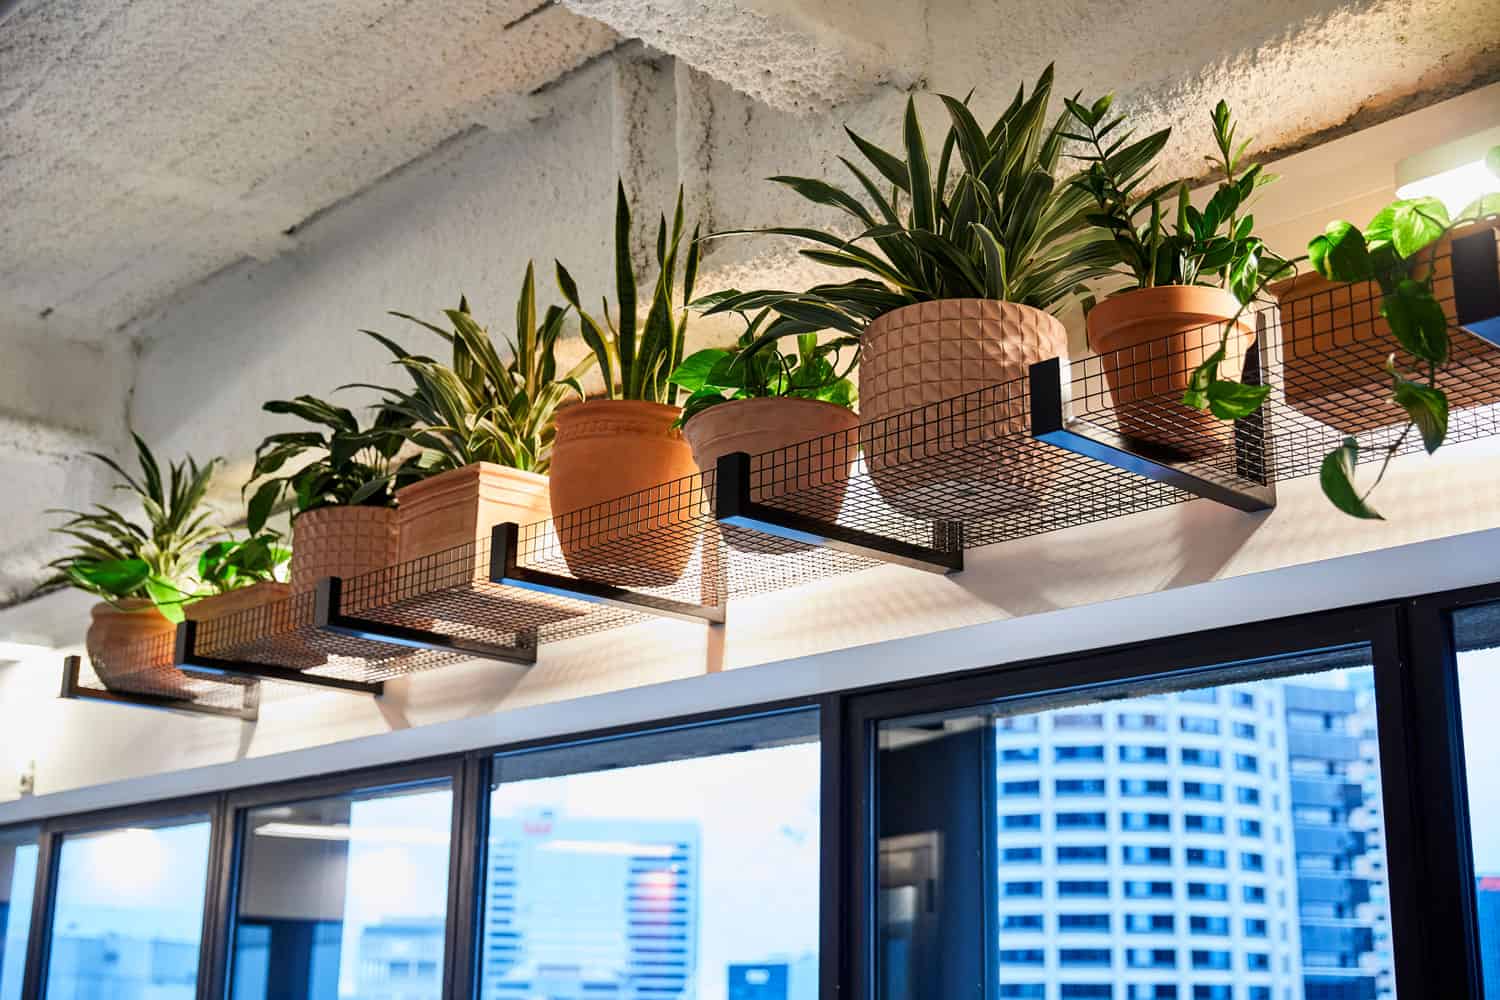 Pot plants in an overhead display in an office breakout area